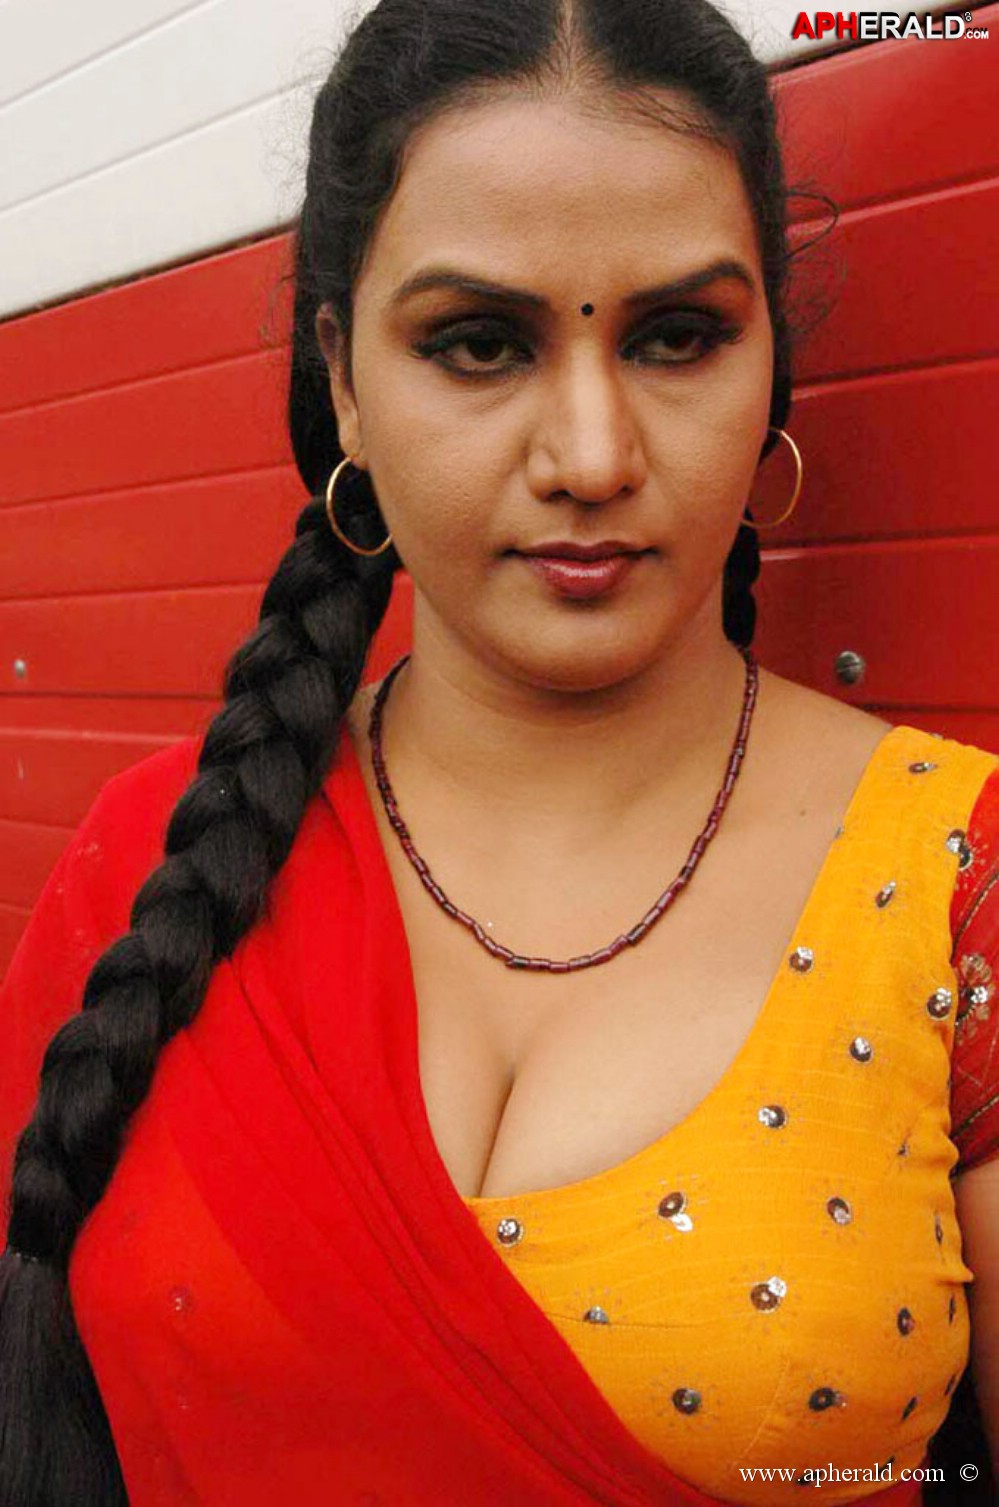 telugu side actress hot pics